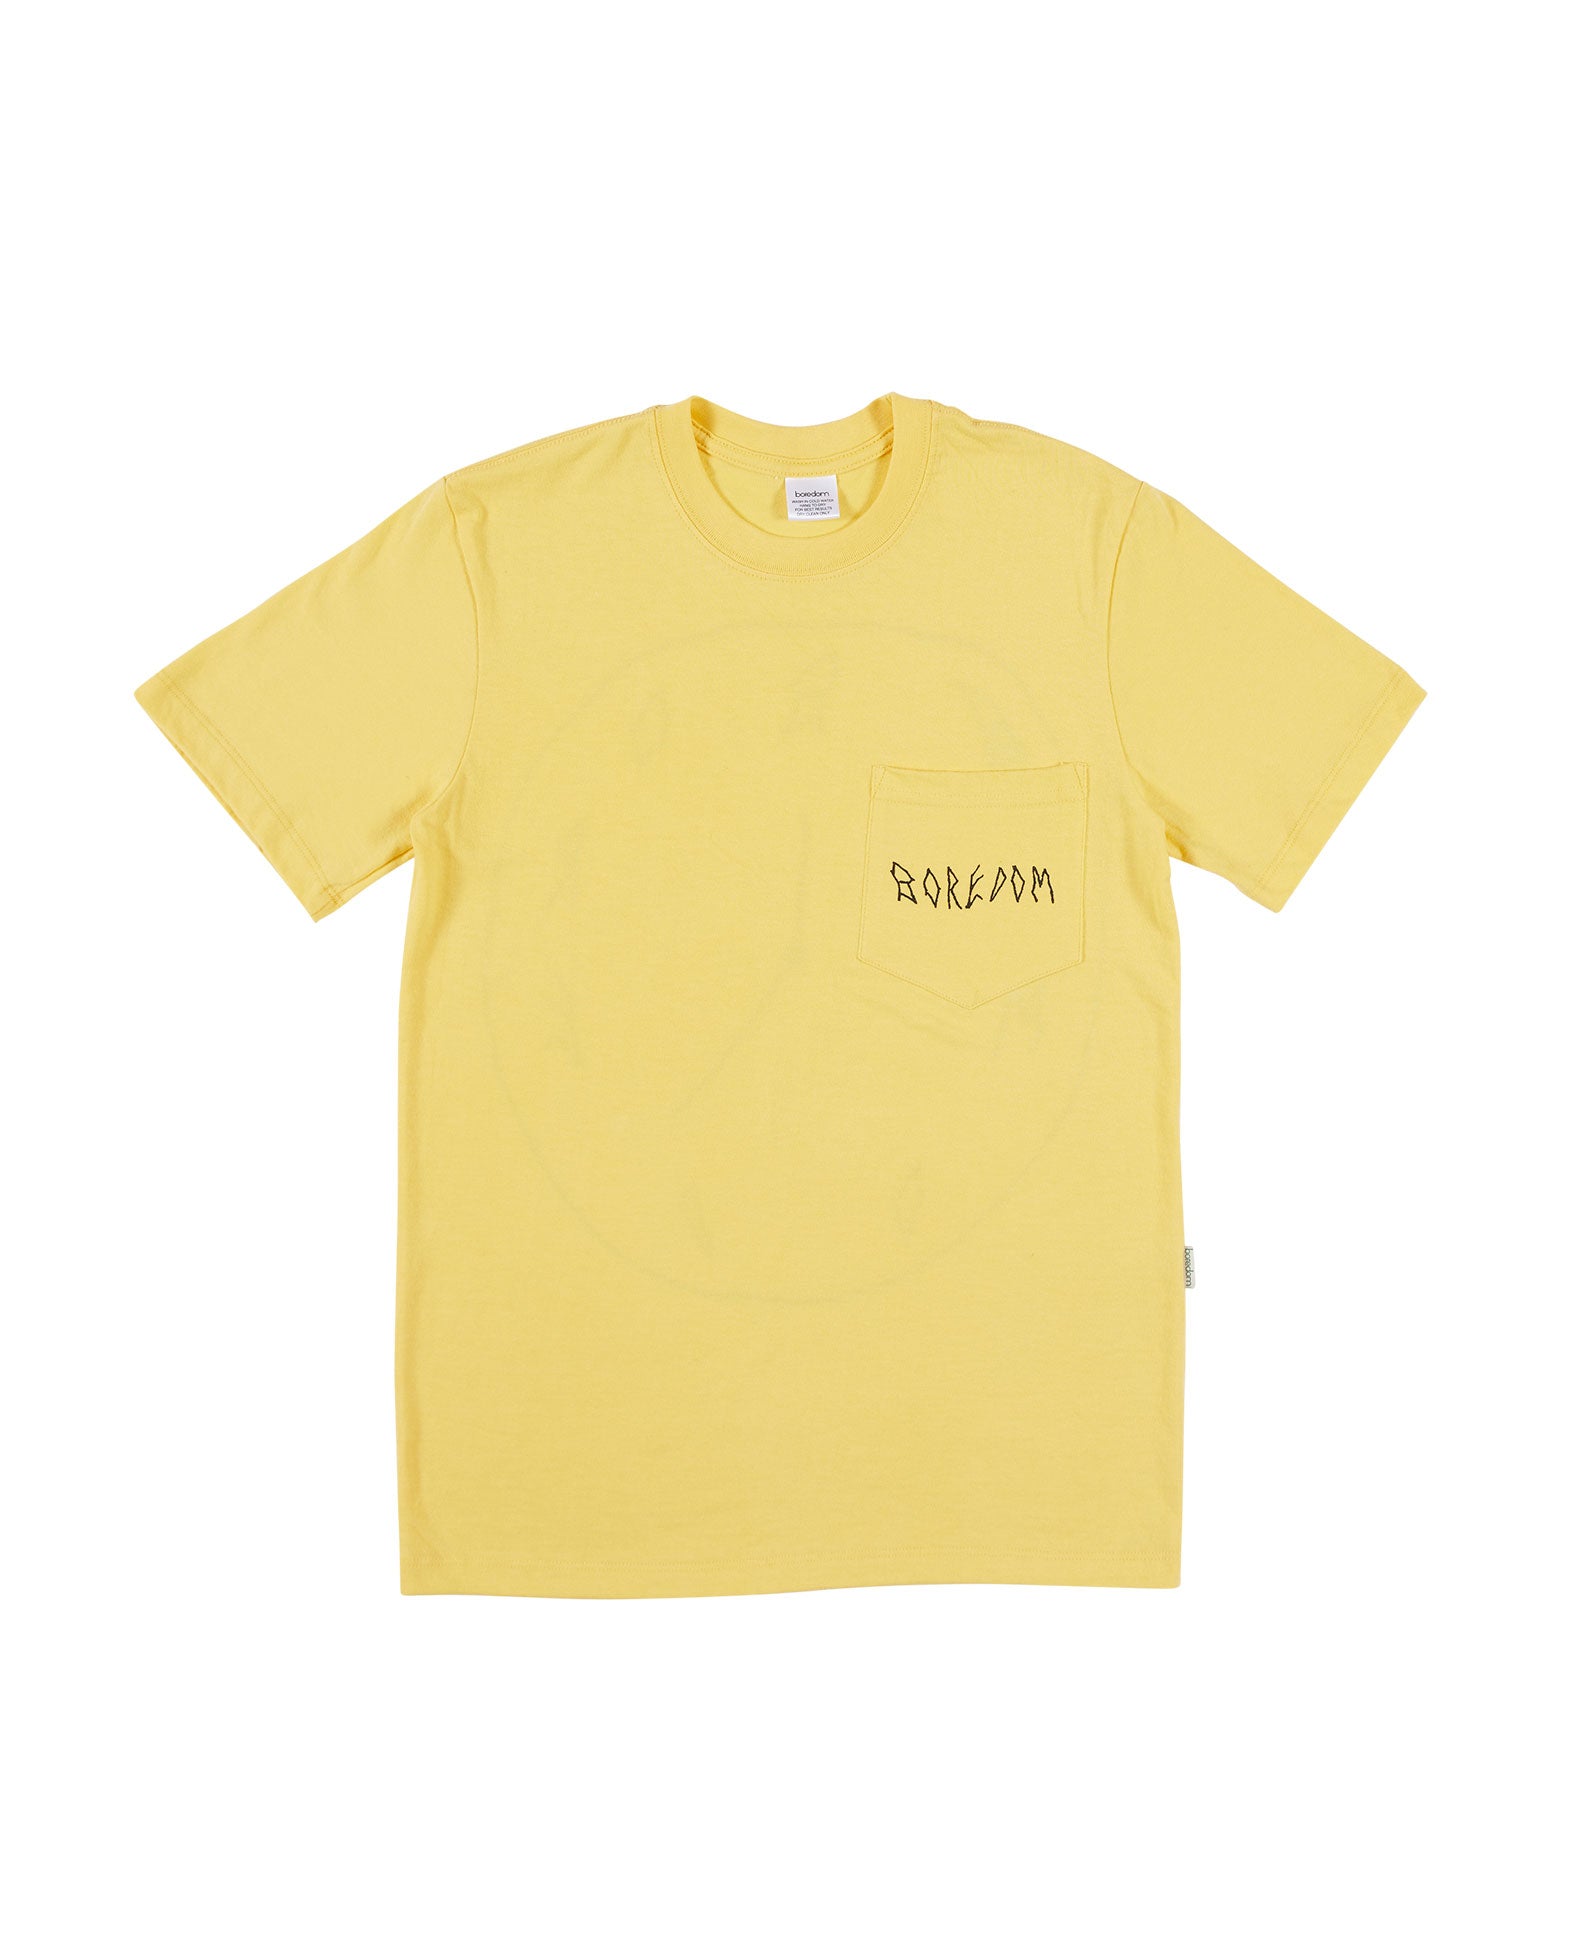 Clock Pocket T-Shirt - Yellow